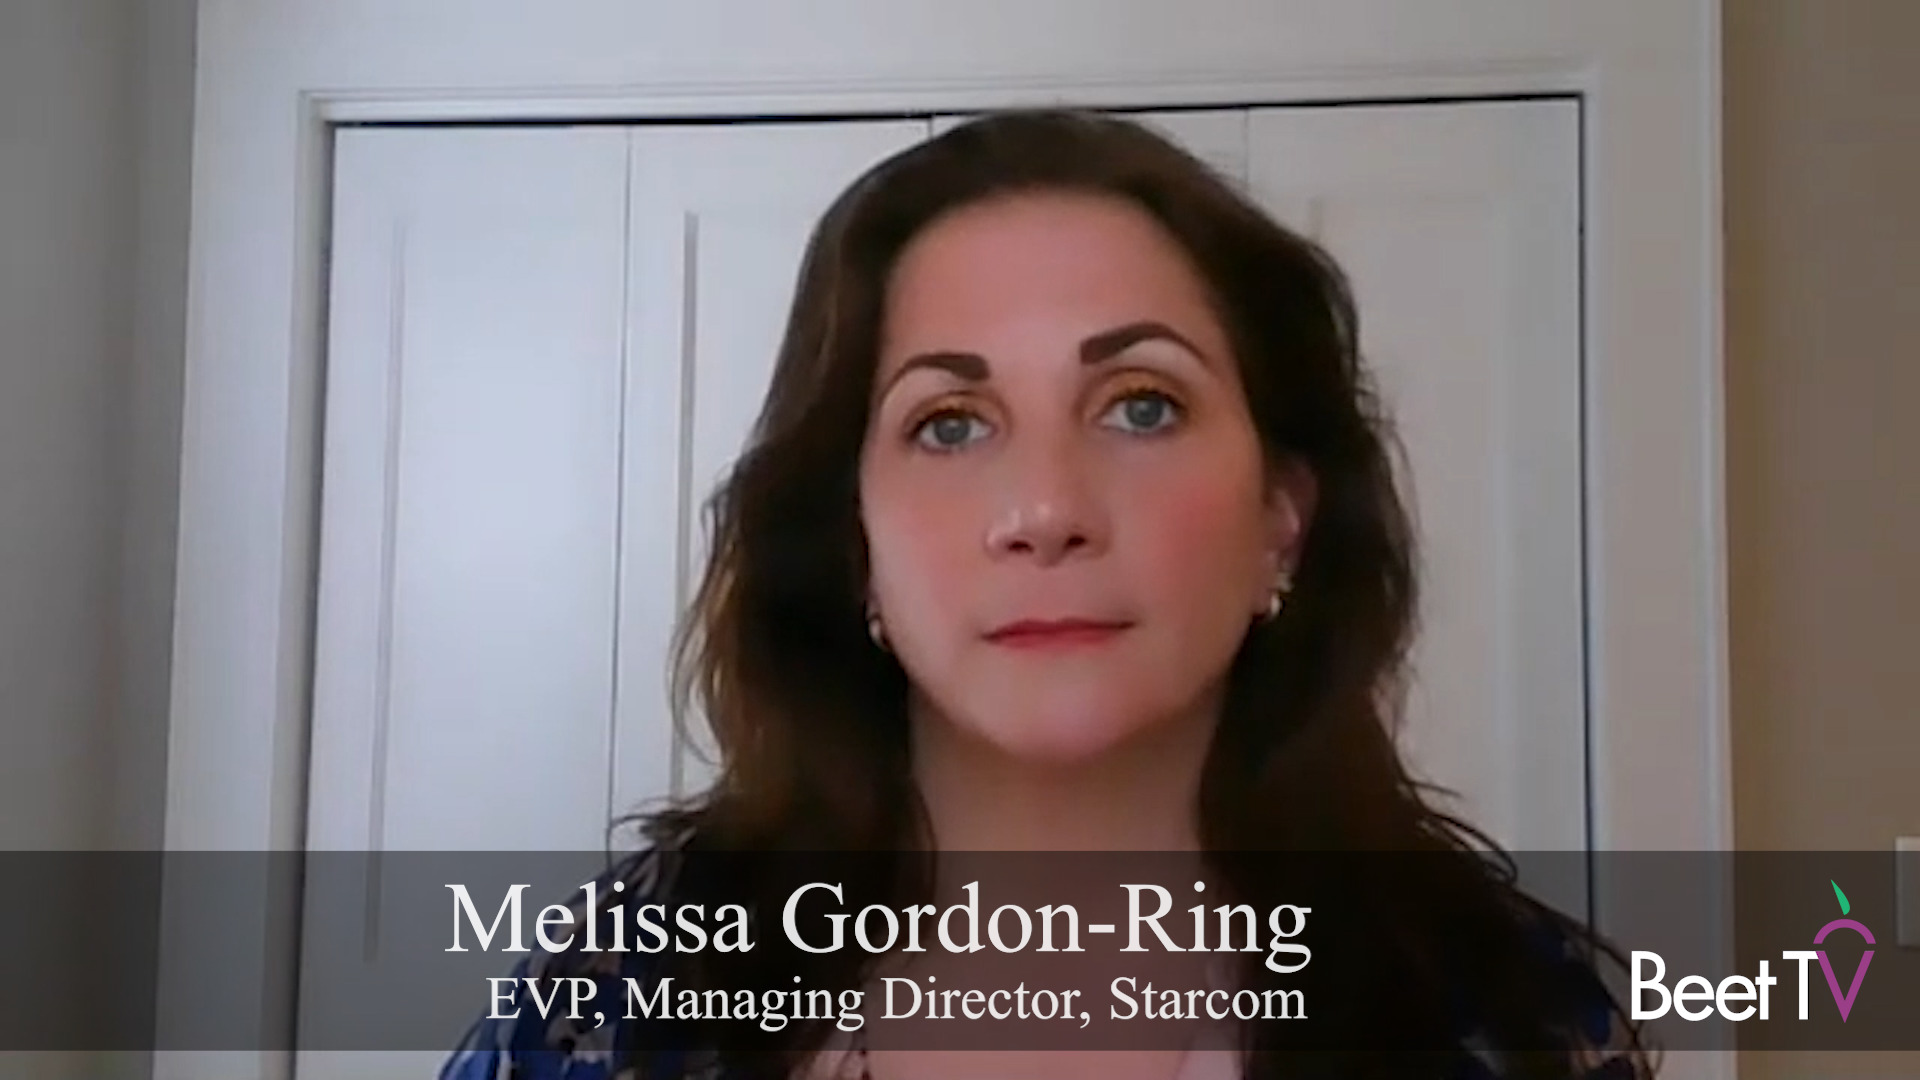 Mobile Data Support Personalized Healthcare Marketing: Starcom’s Melissa Gordon-Ring